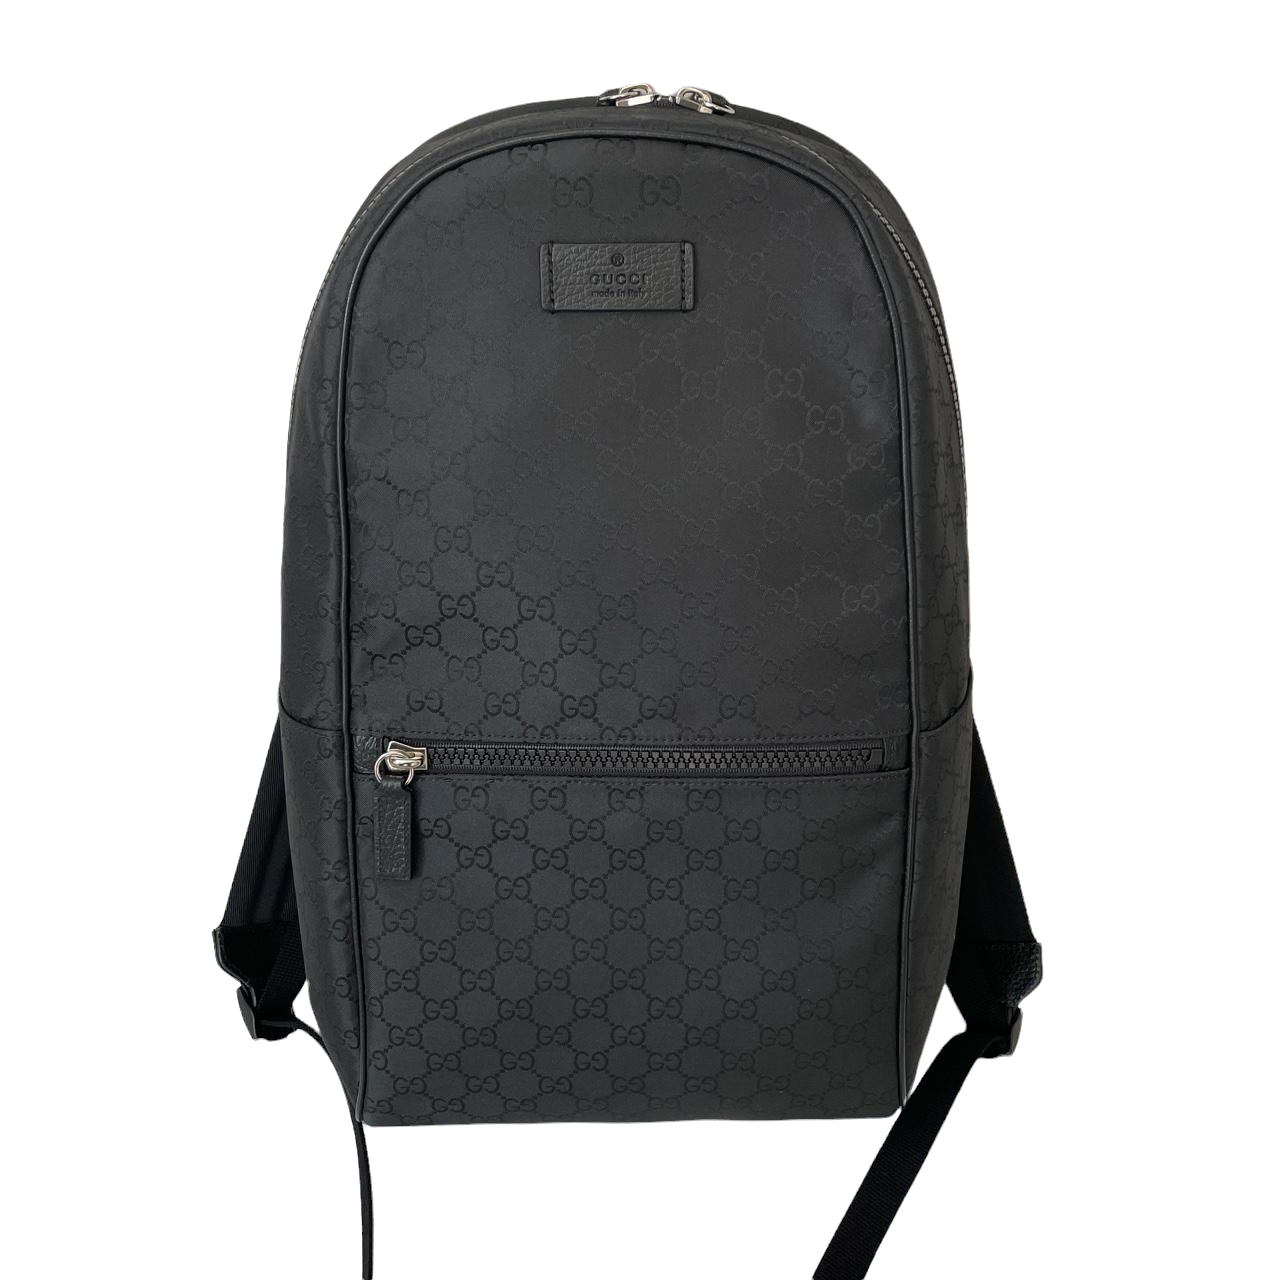 Gucci Backpack Leather Deals | bellvalefarms.com